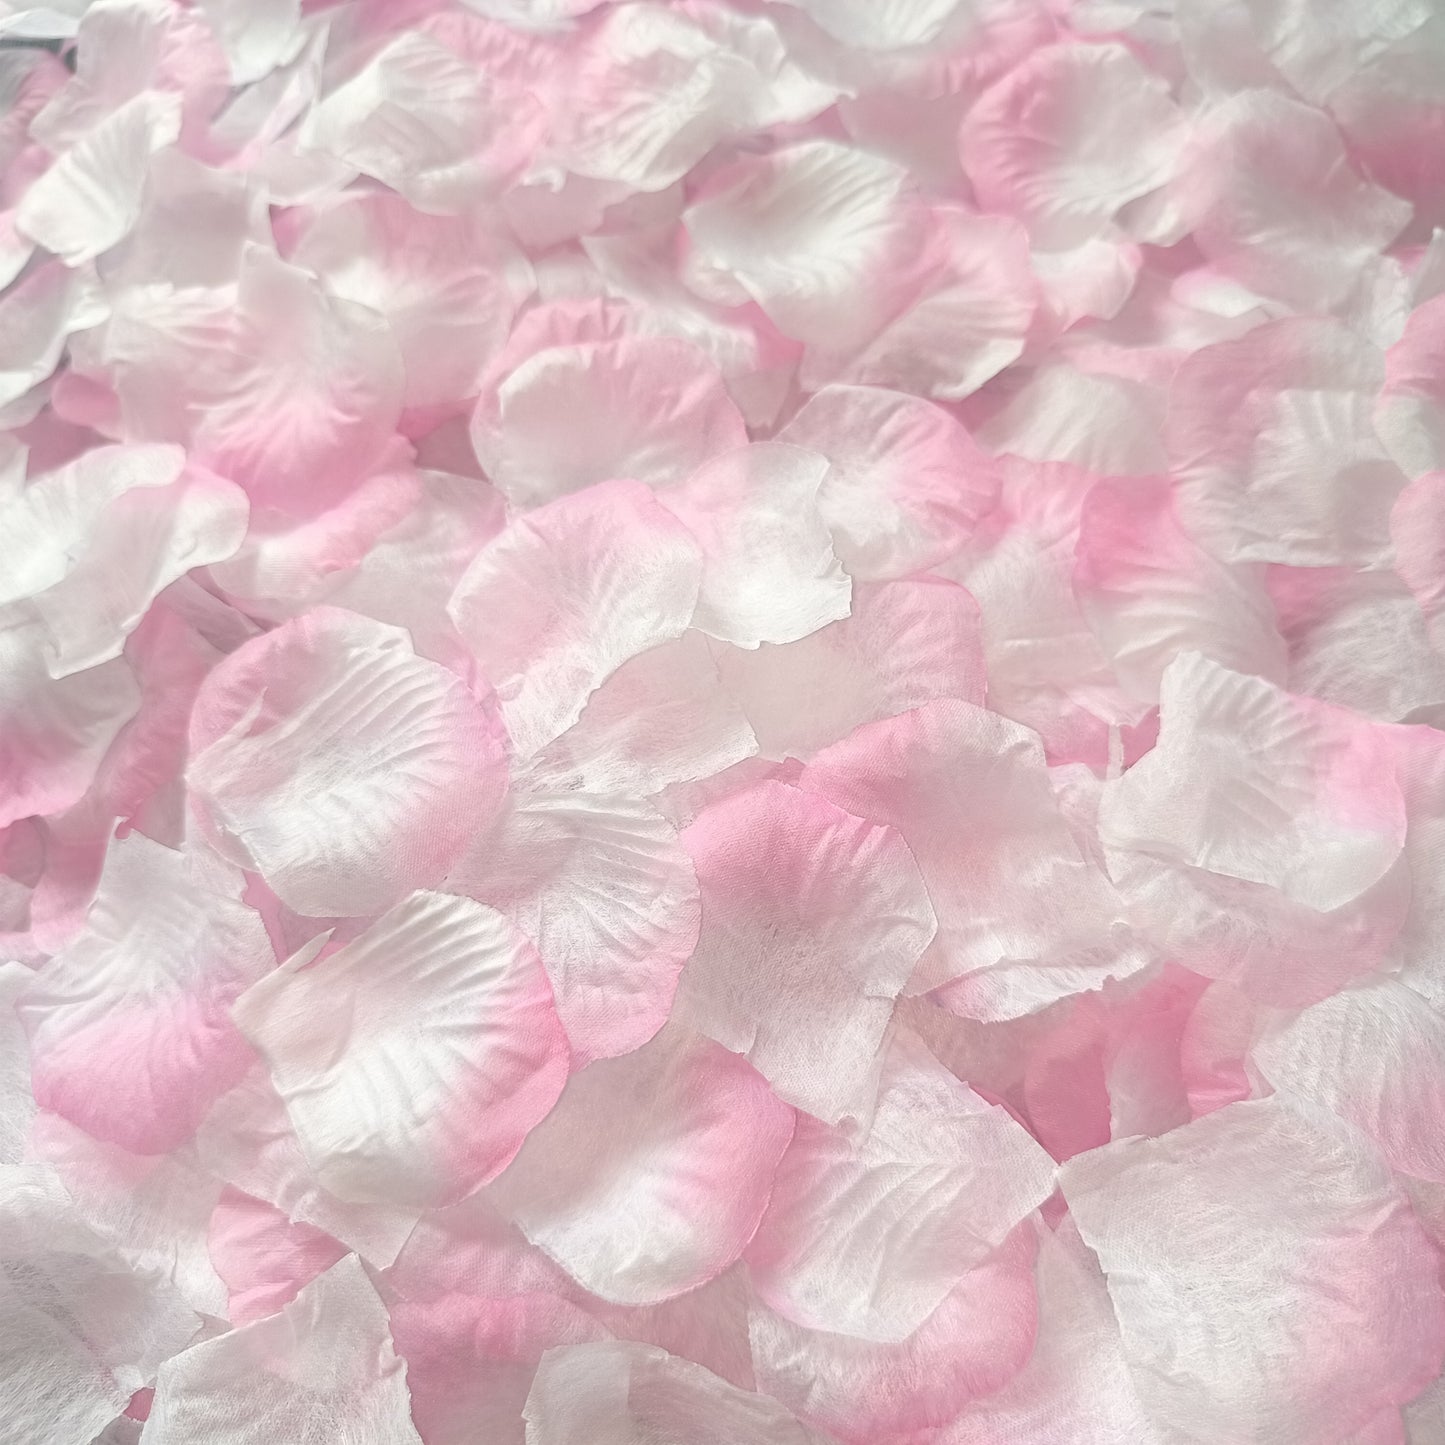 100/500/1000pcs Artificial Rose Petals Romantic Artificial Flower Silk Petals Valentine Day Wedding Flower Petal Decoration